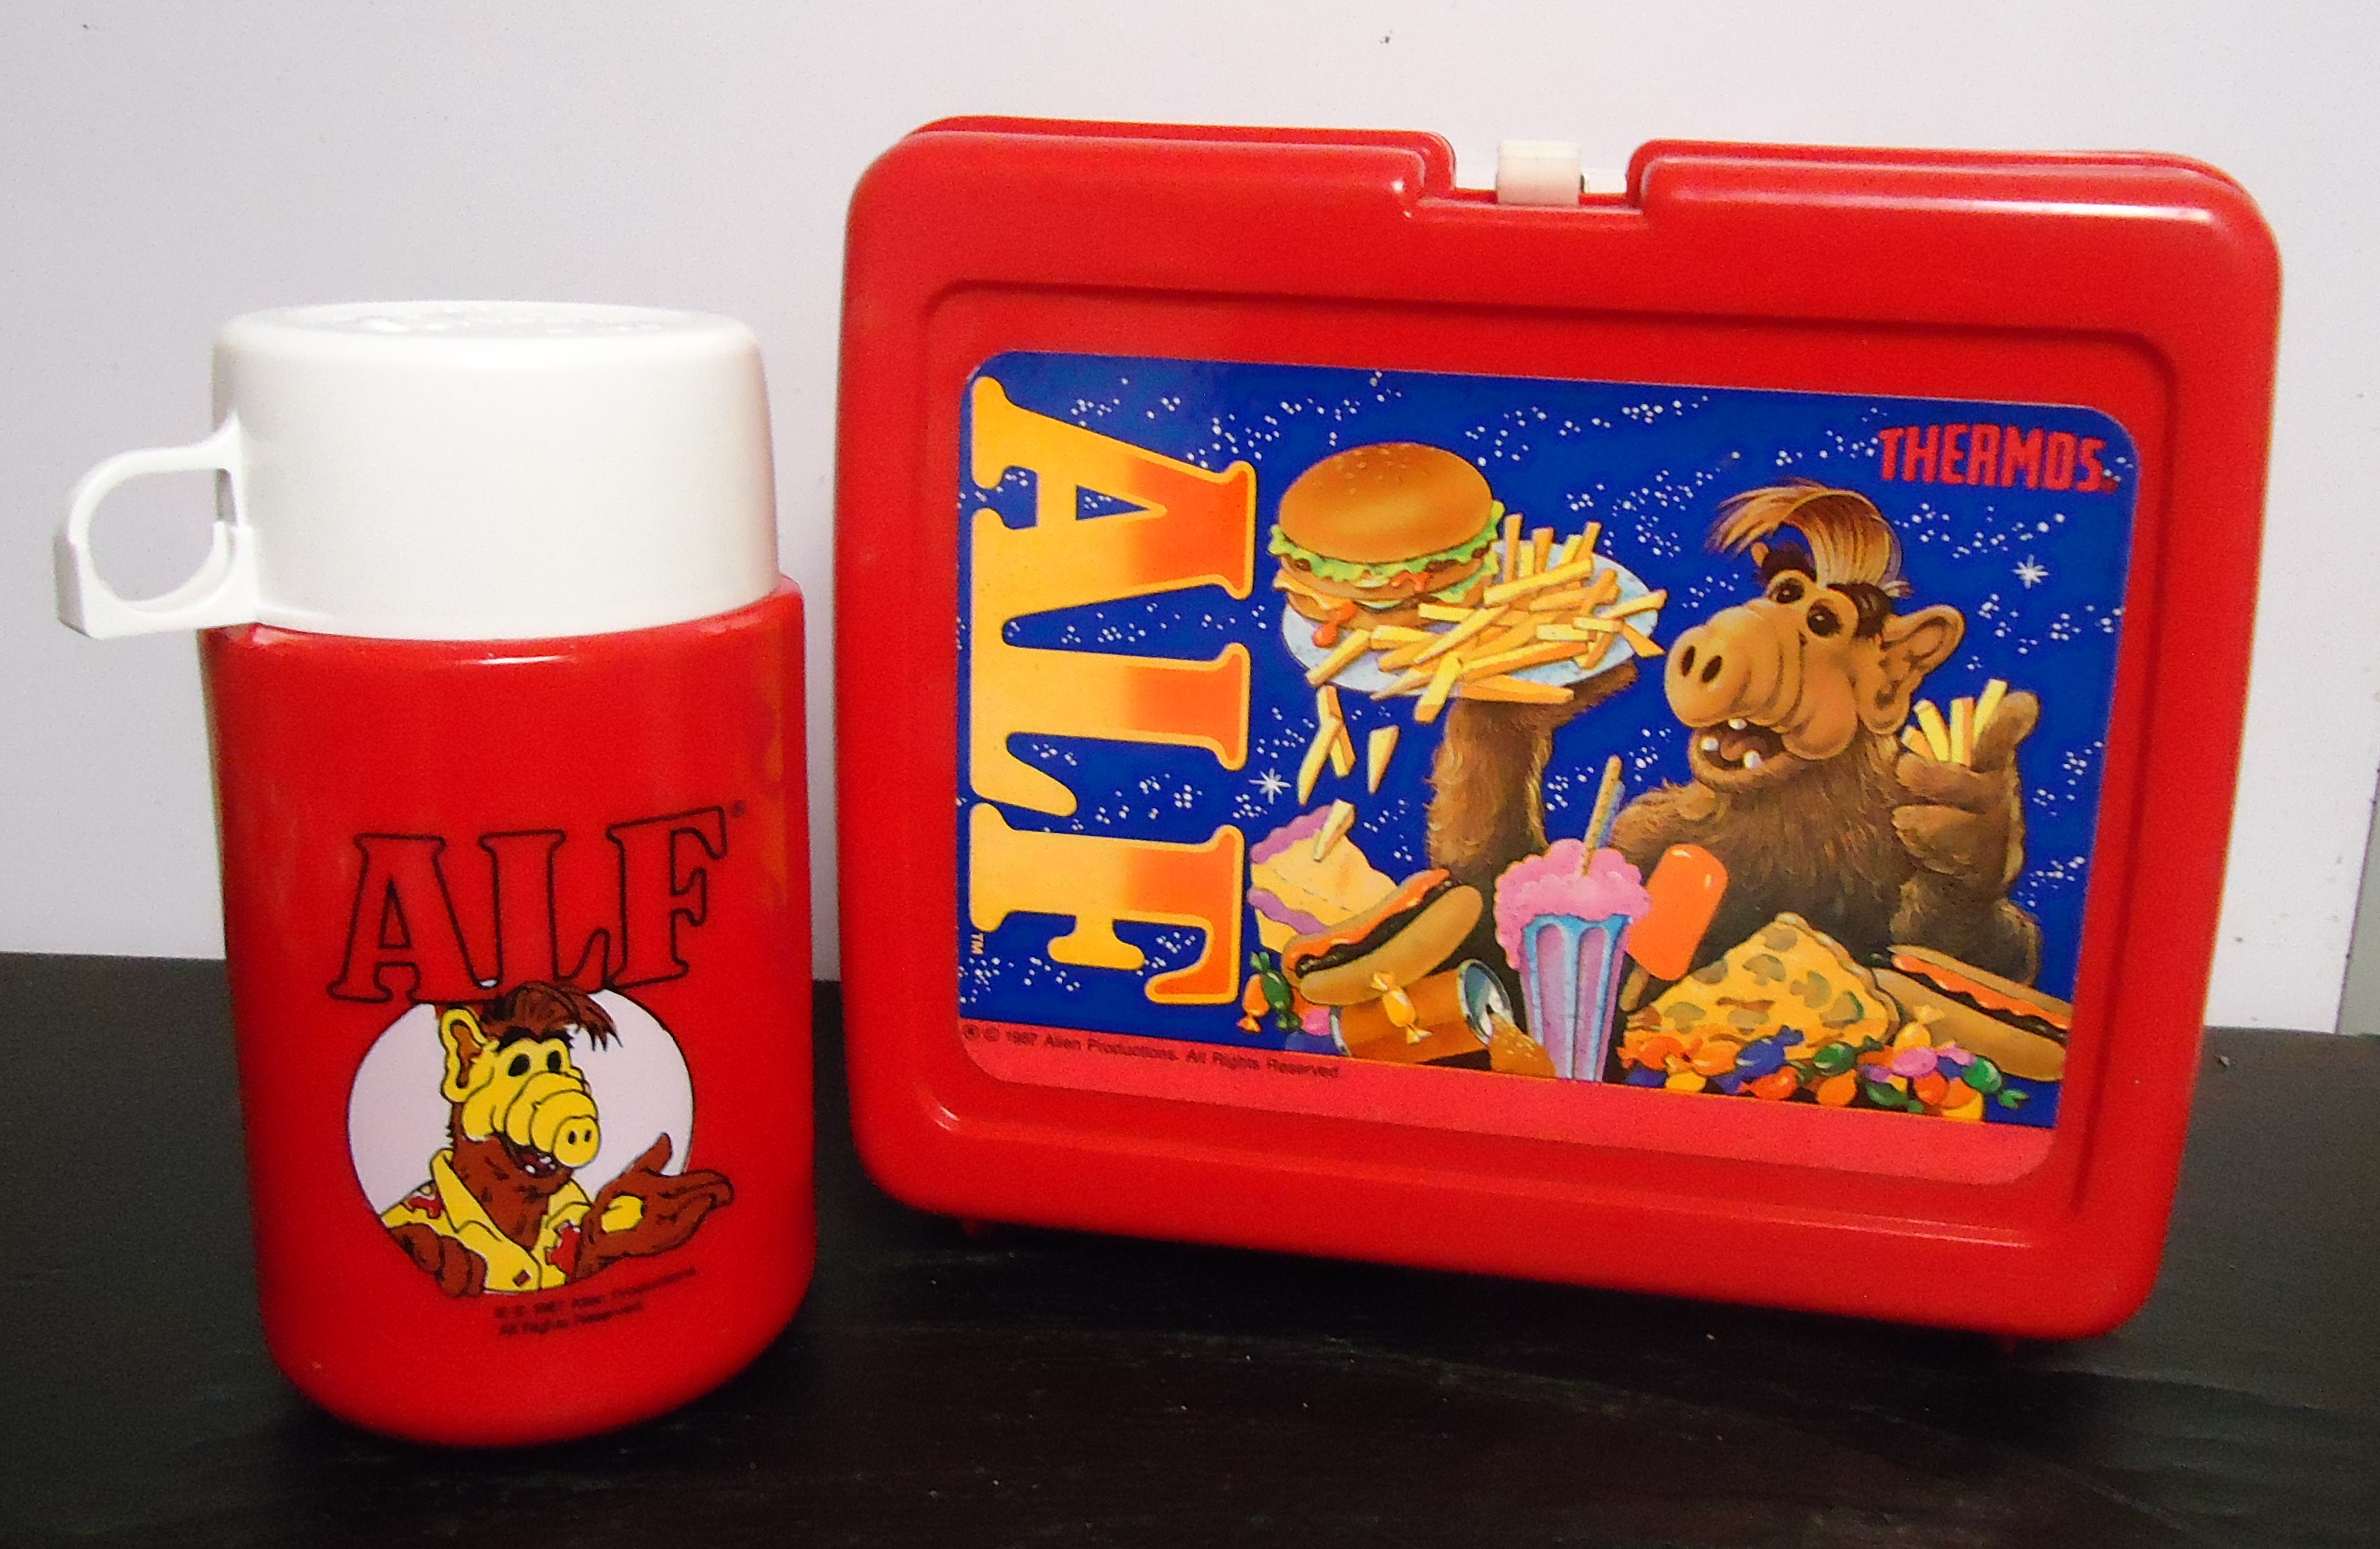 (12) "Alf" Plastic Lunch Box
W/ Thermos
$36.00